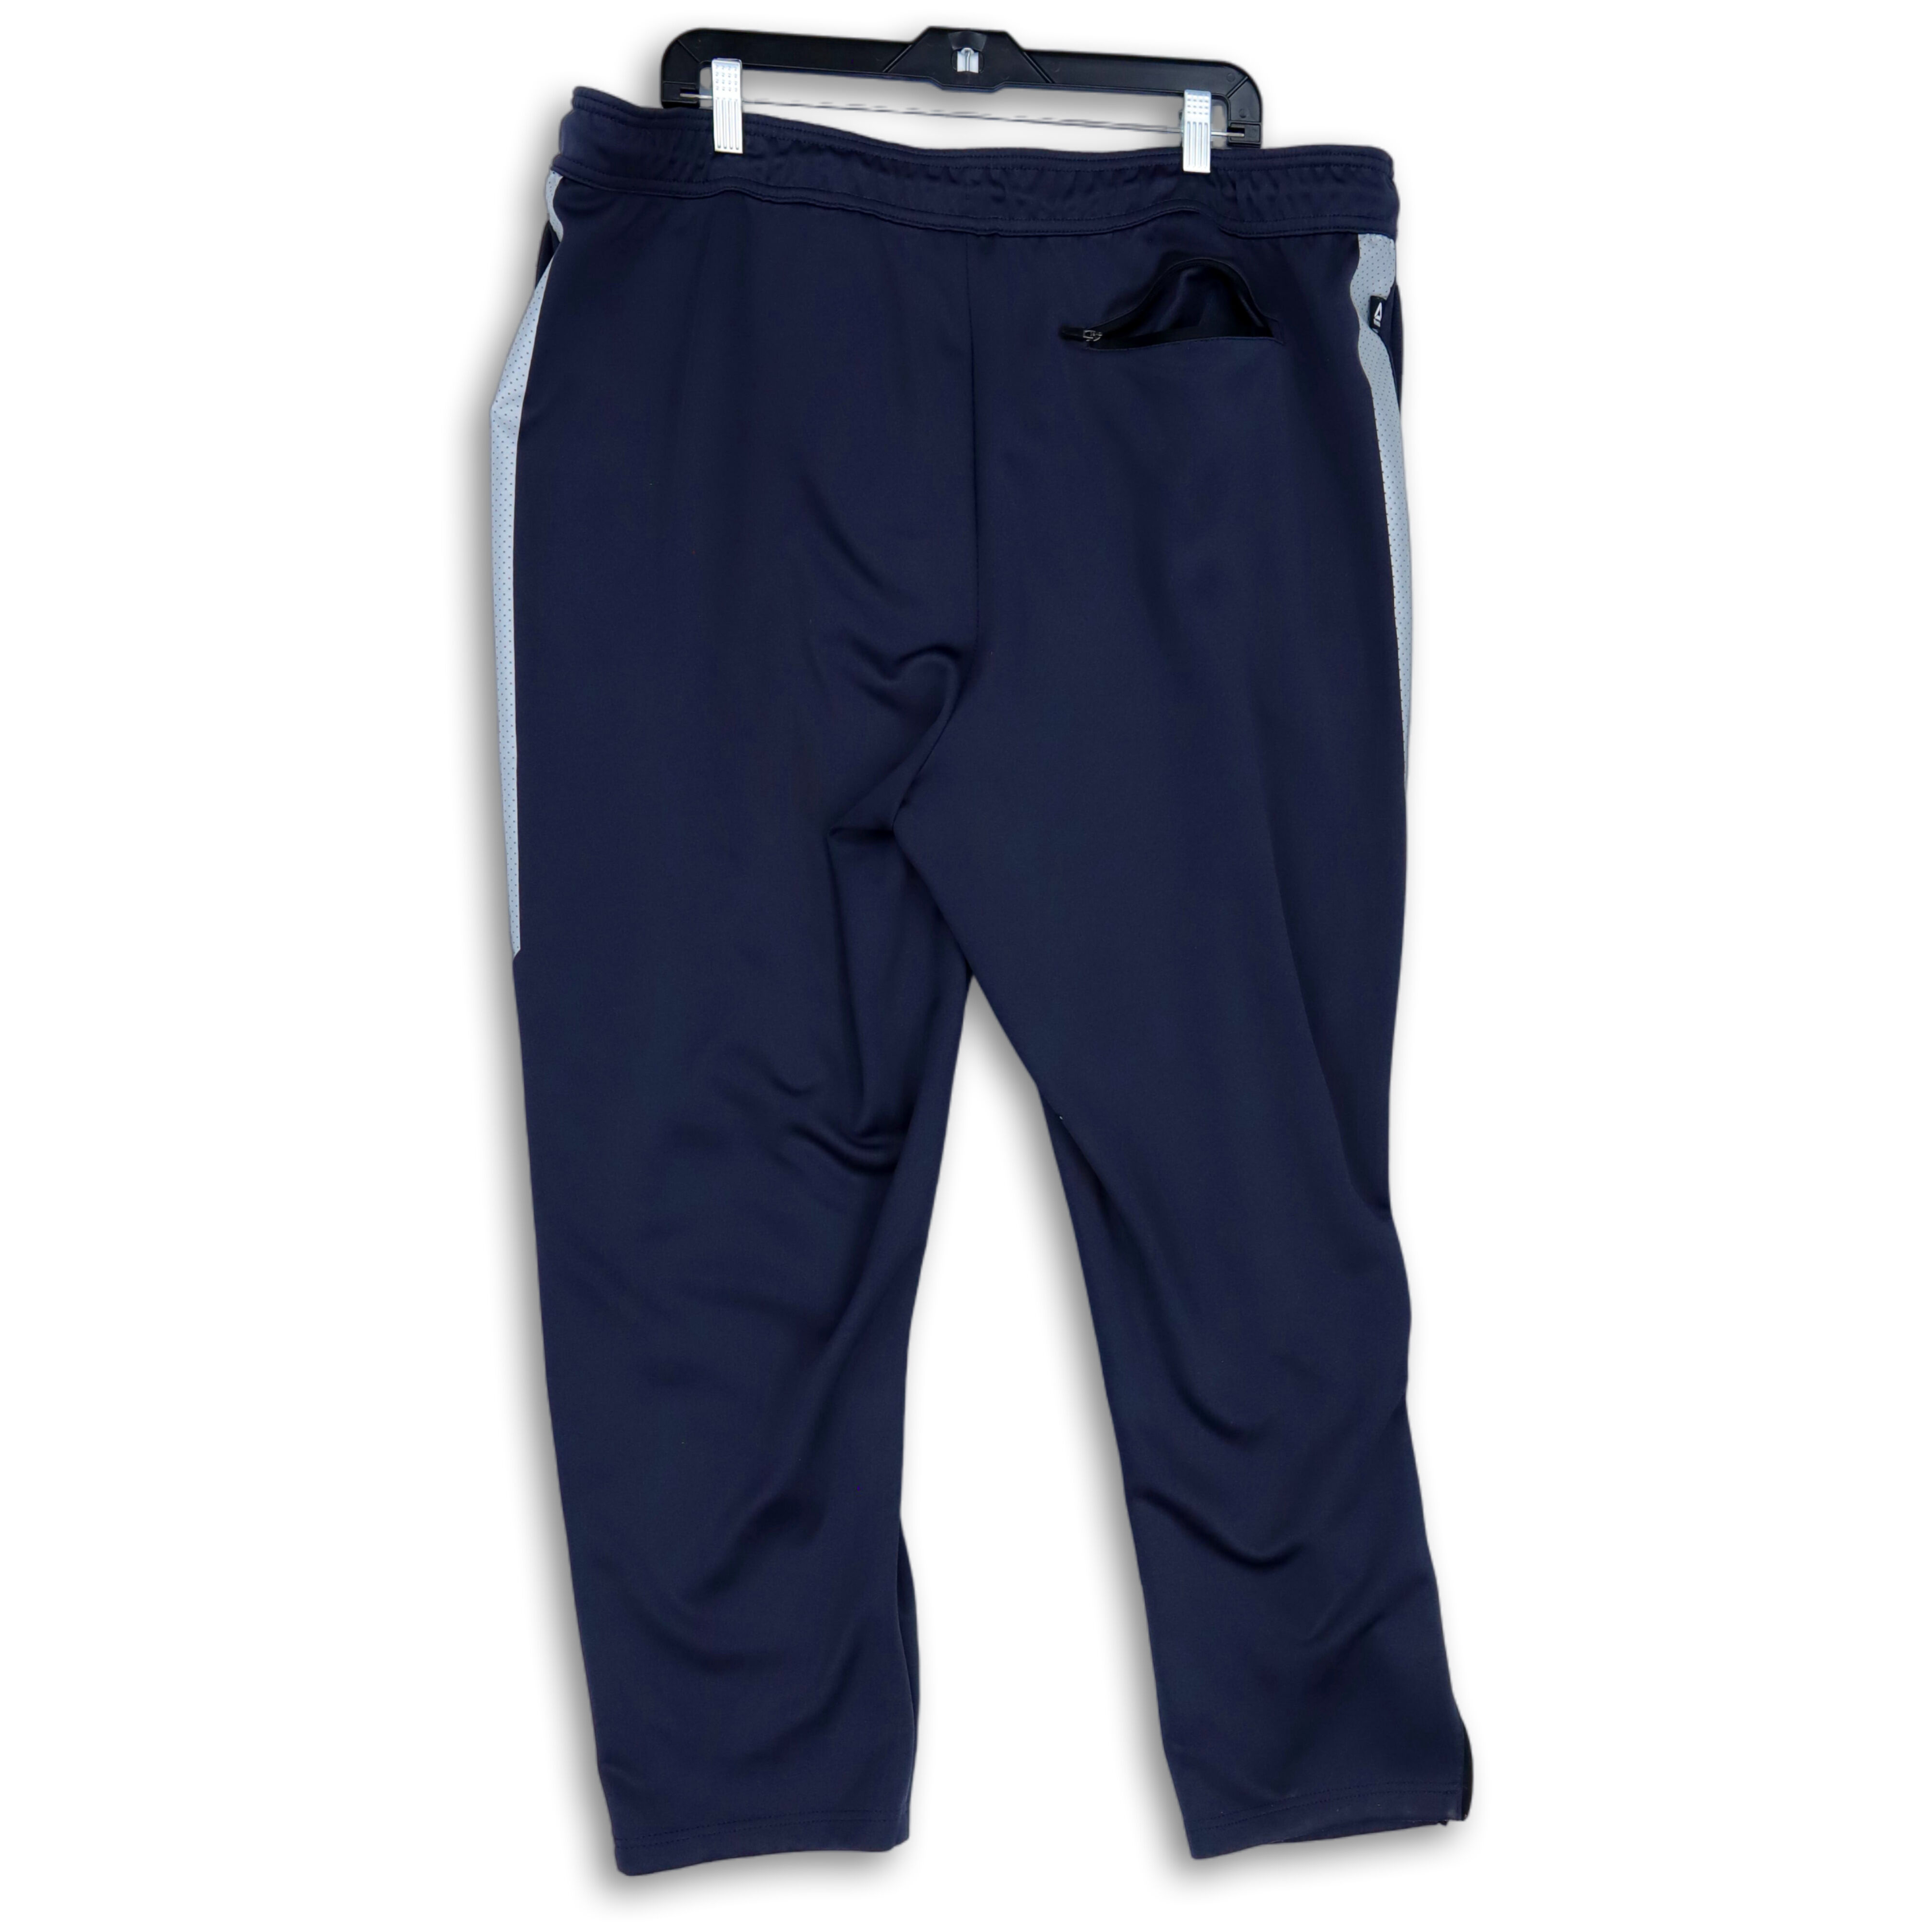 Men s Adidas HRD Track Pants FR5735 Option 2 x8 15 95